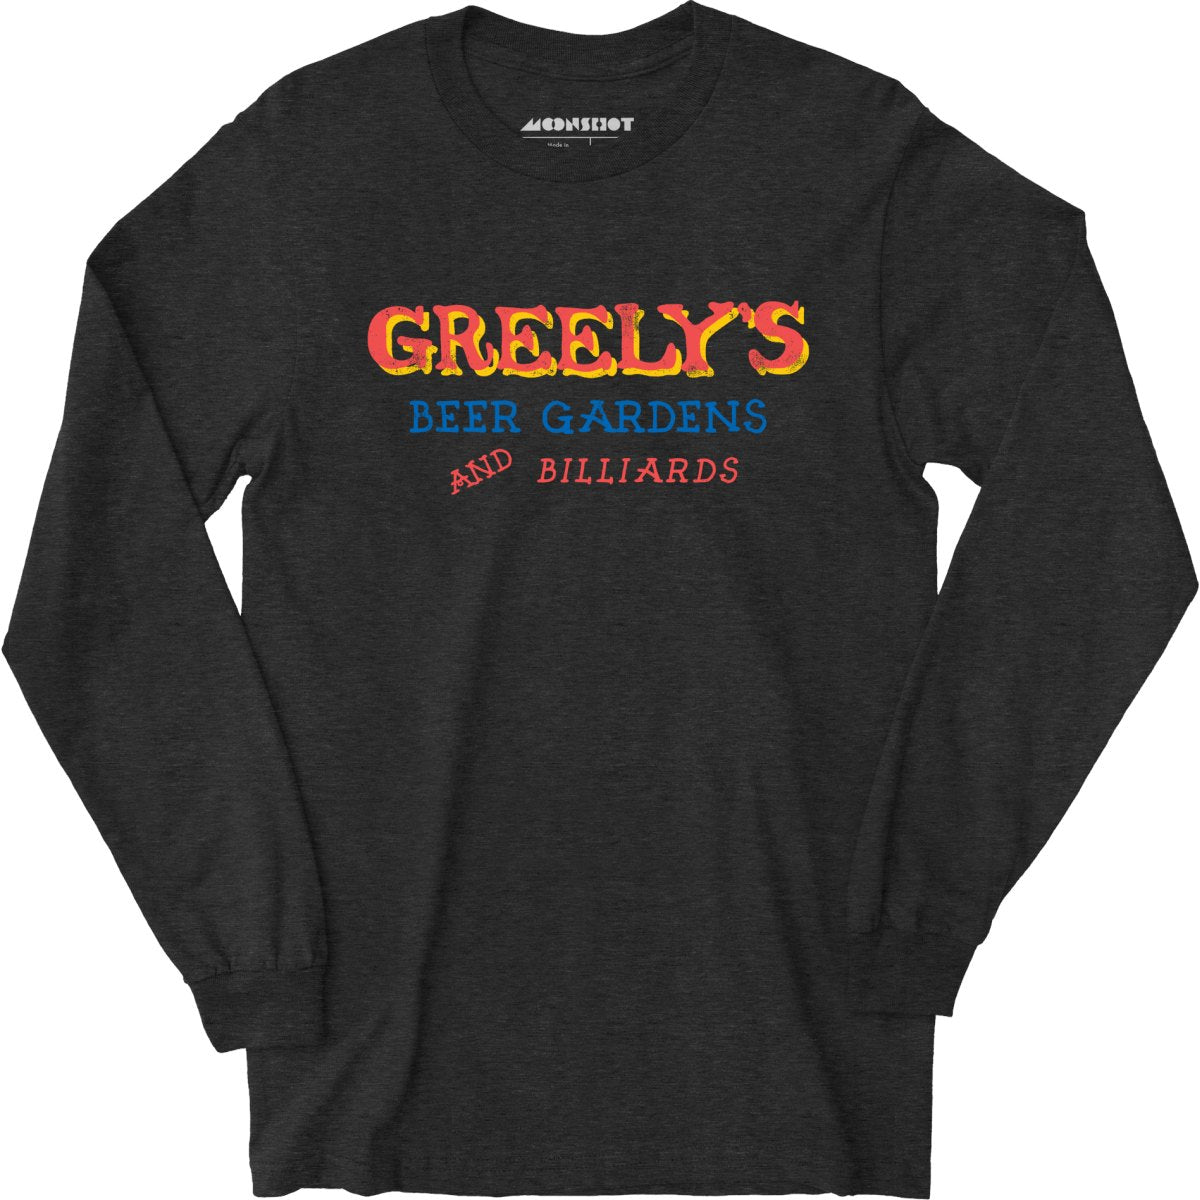 Greely's Beer Gardens & Billiards - Long Sleeve T-Shirt